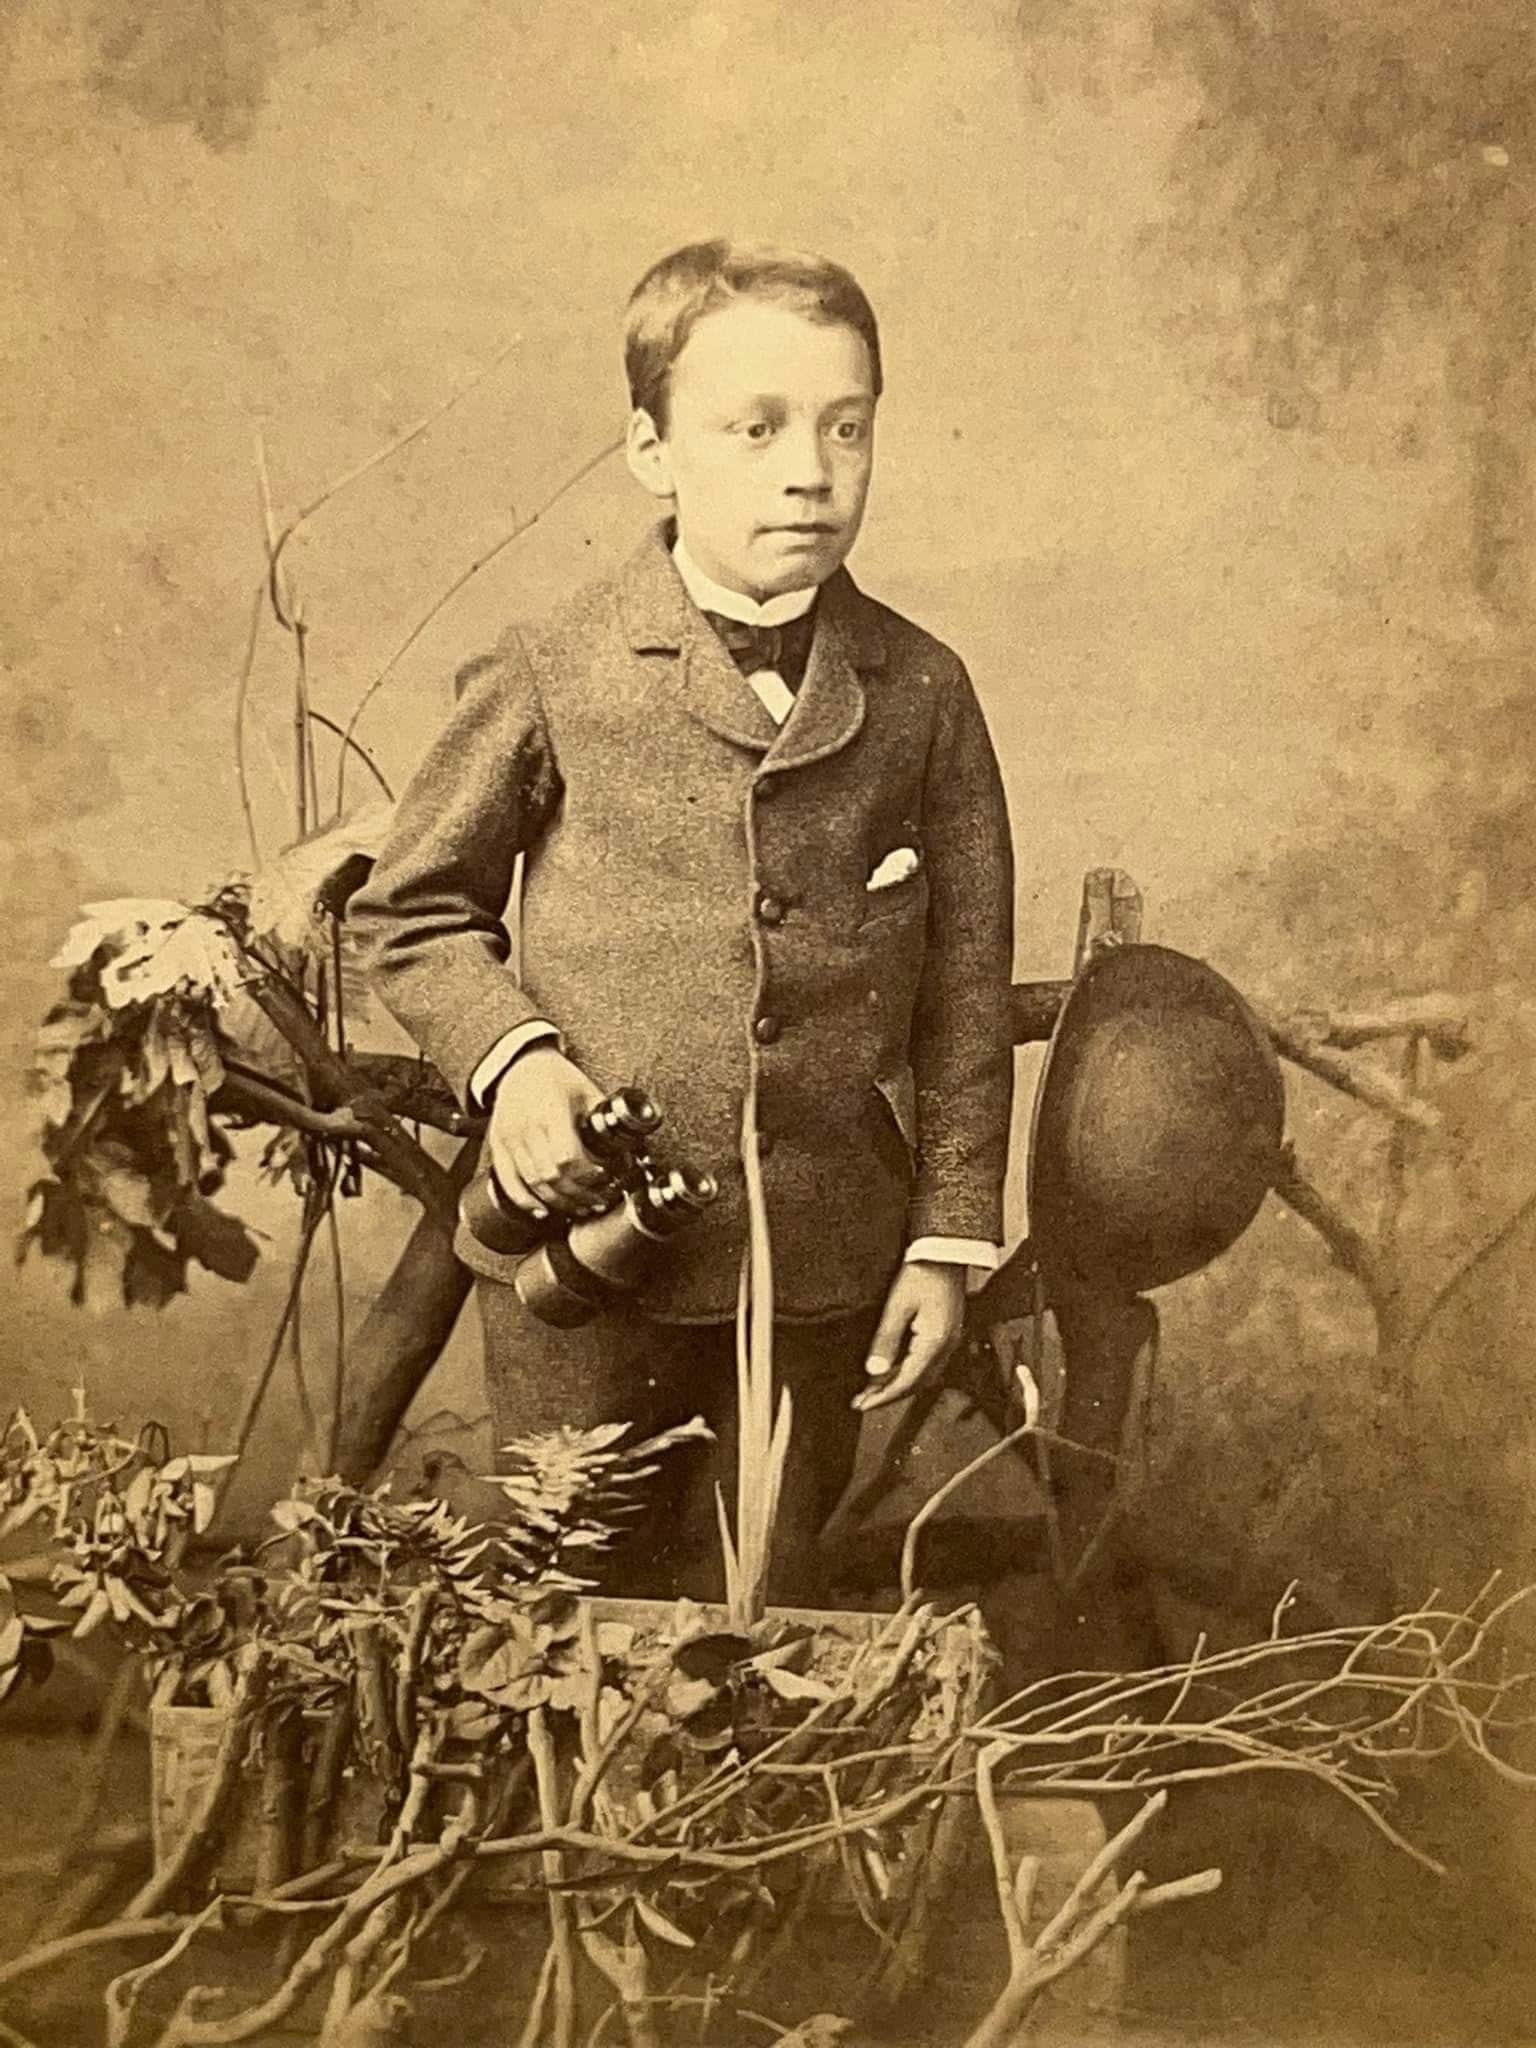 Antique Victorian Cabinet photo Little boy holding binoculars